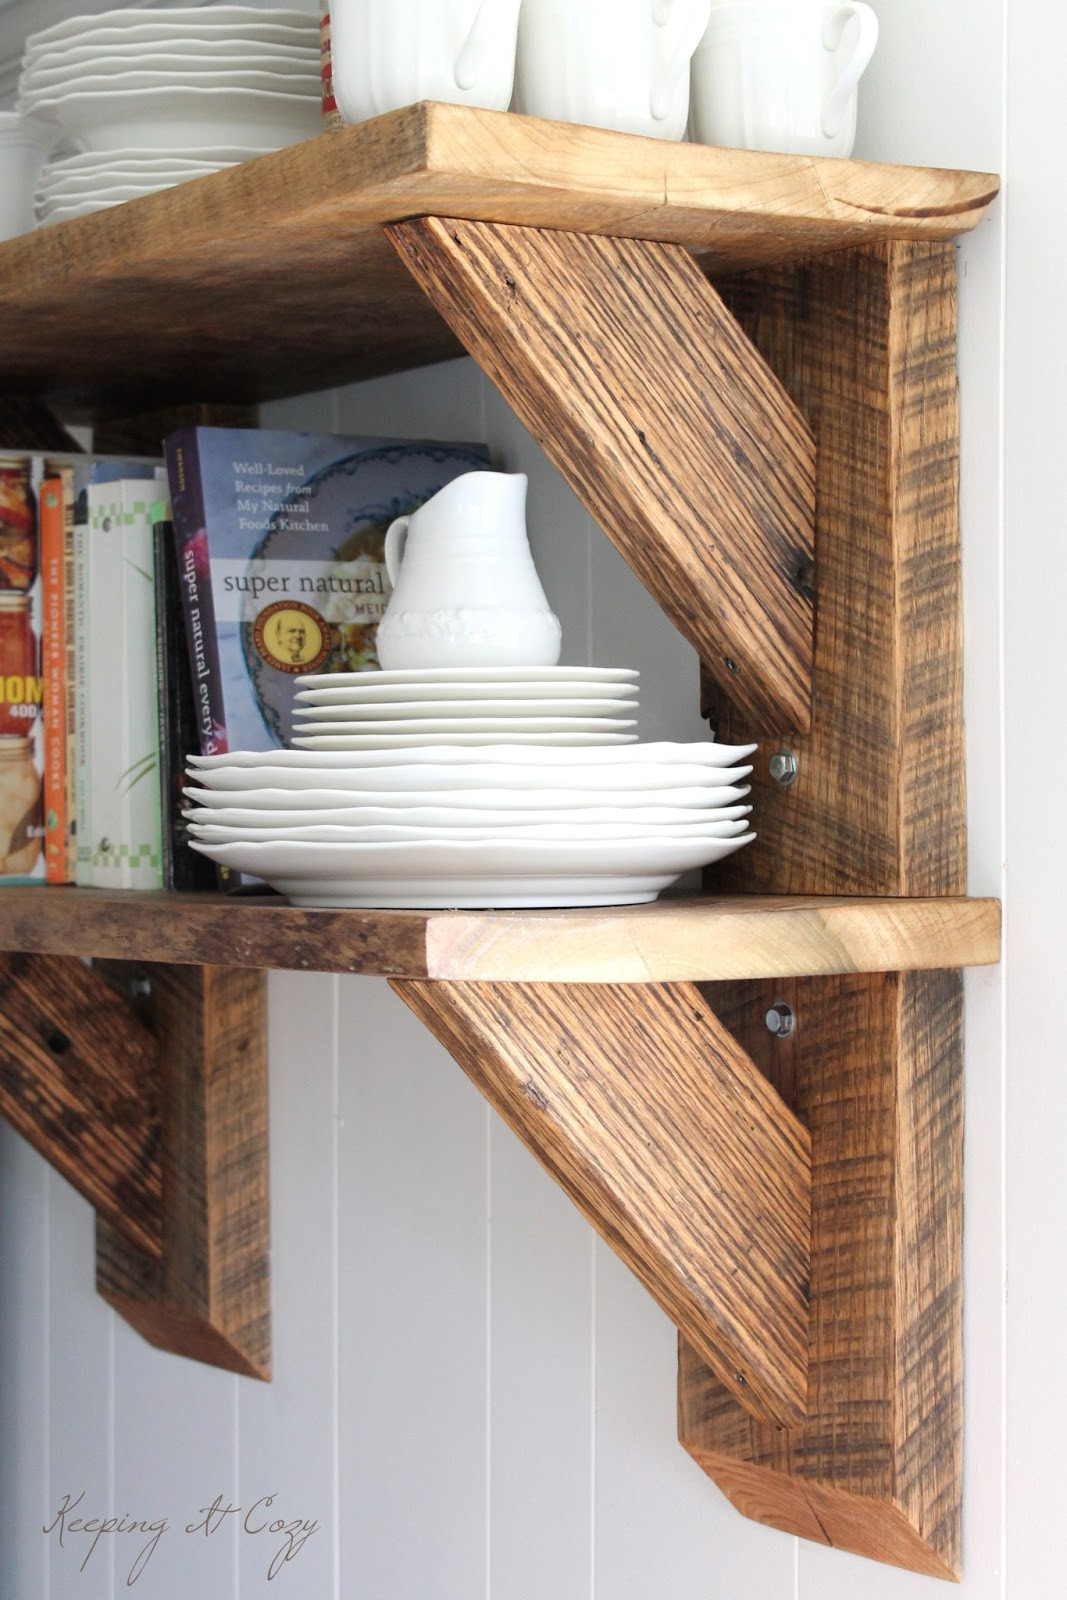 Reclaimed Wood Shelves DIY
 Keeping It Cozy Reclaimed Wood Kitchen Shelves